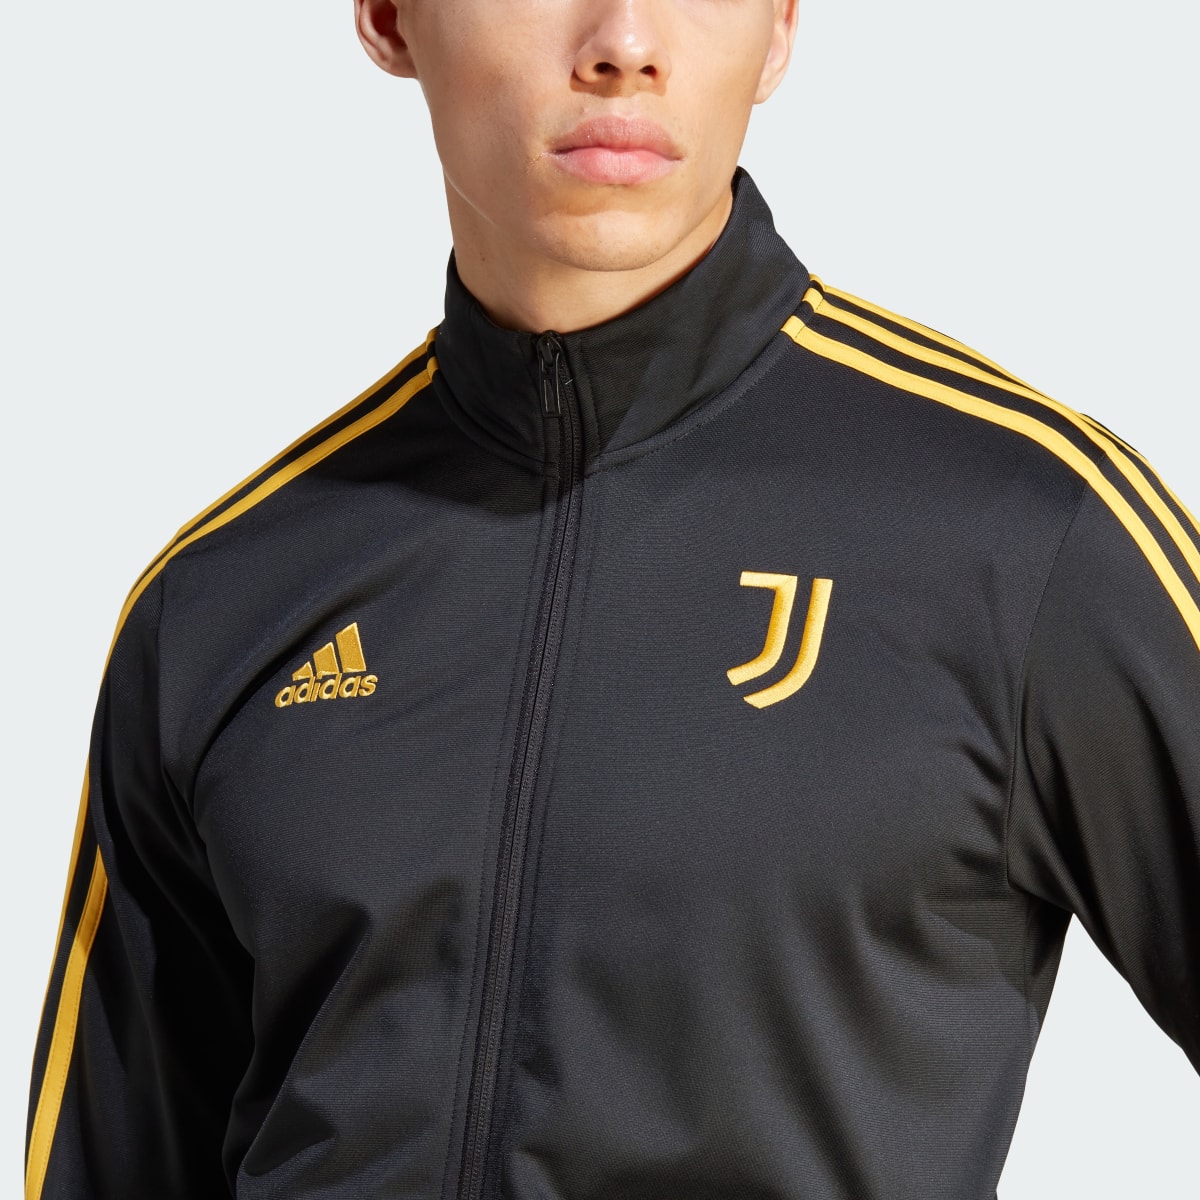 Adidas Juventus DNA Track Top. 6